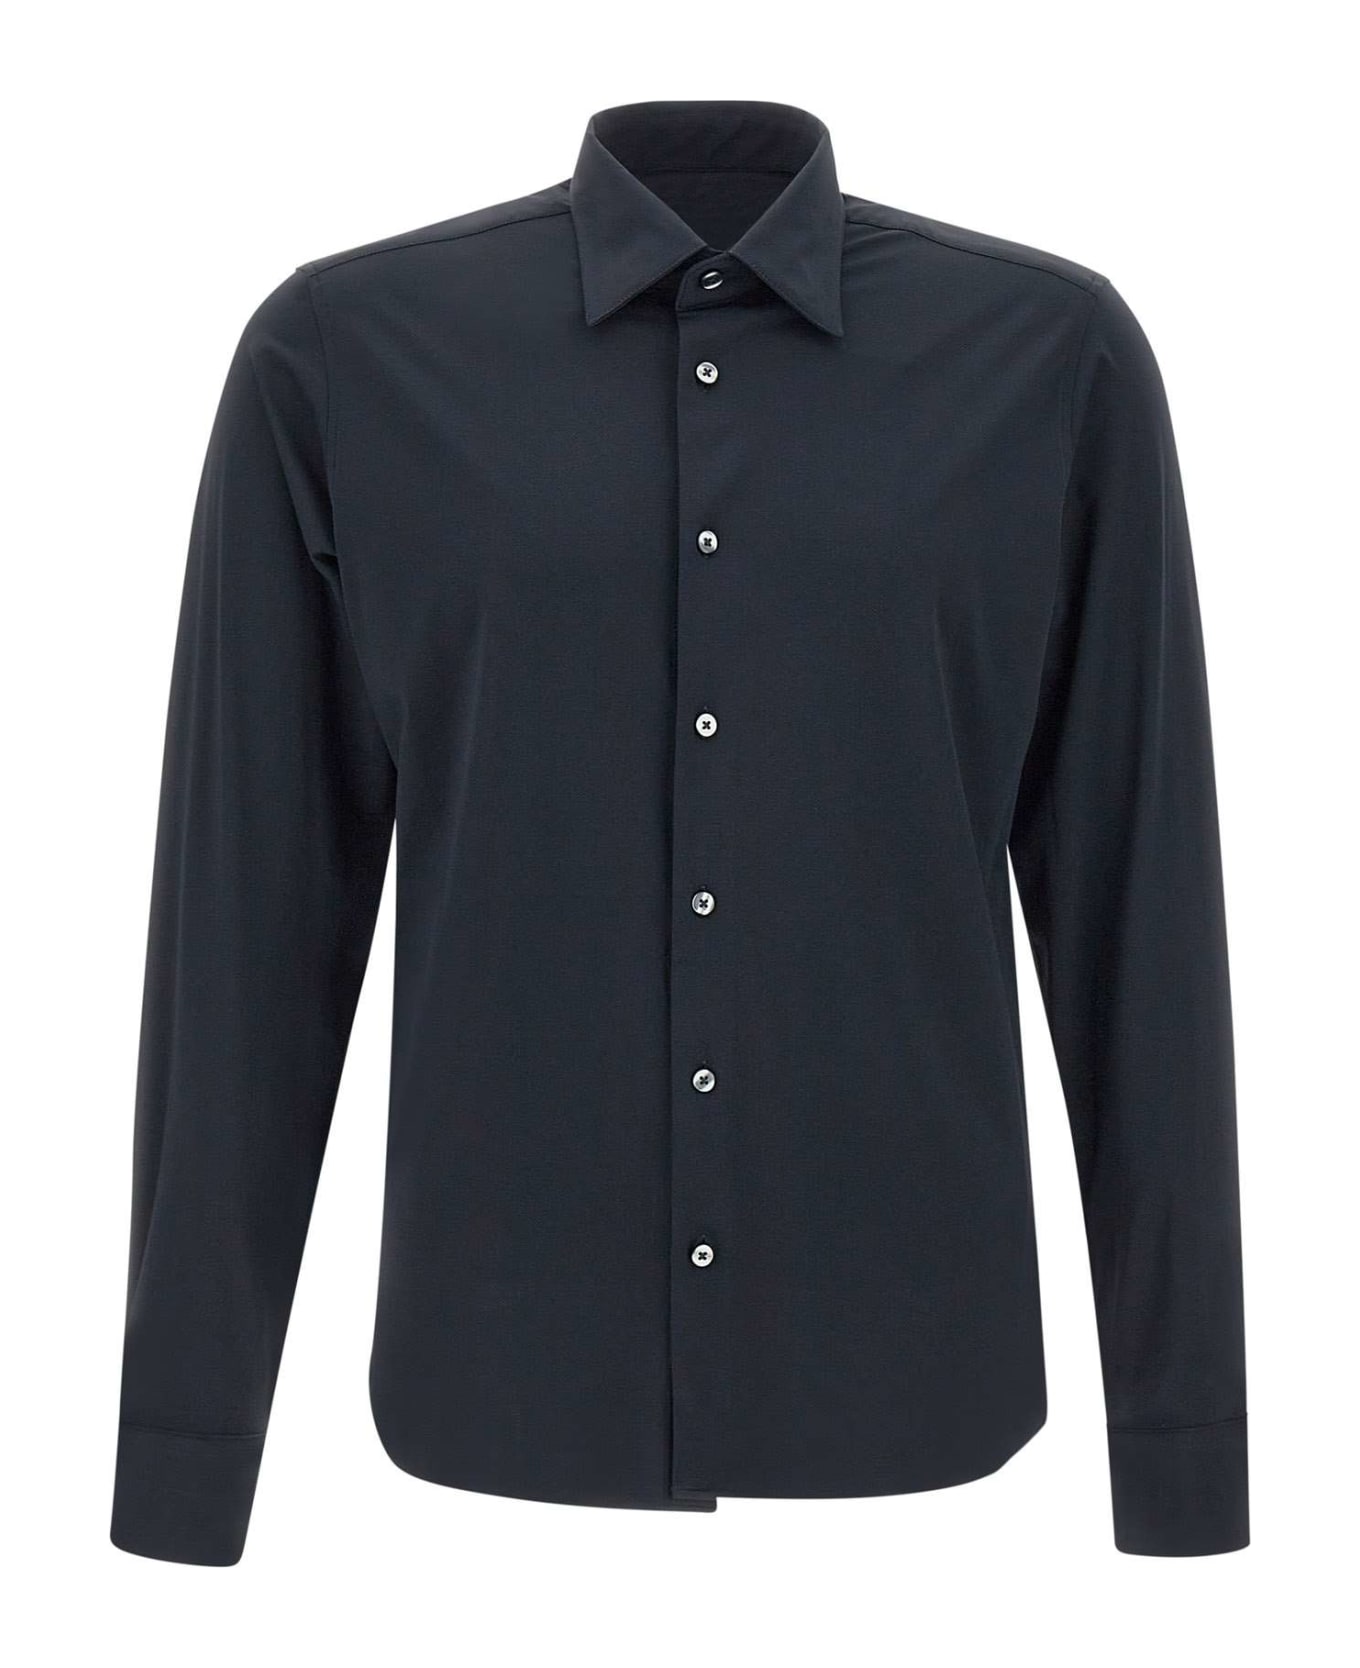 RRD - Roberto Ricci Design 'oxford' Shirt - Blue Black